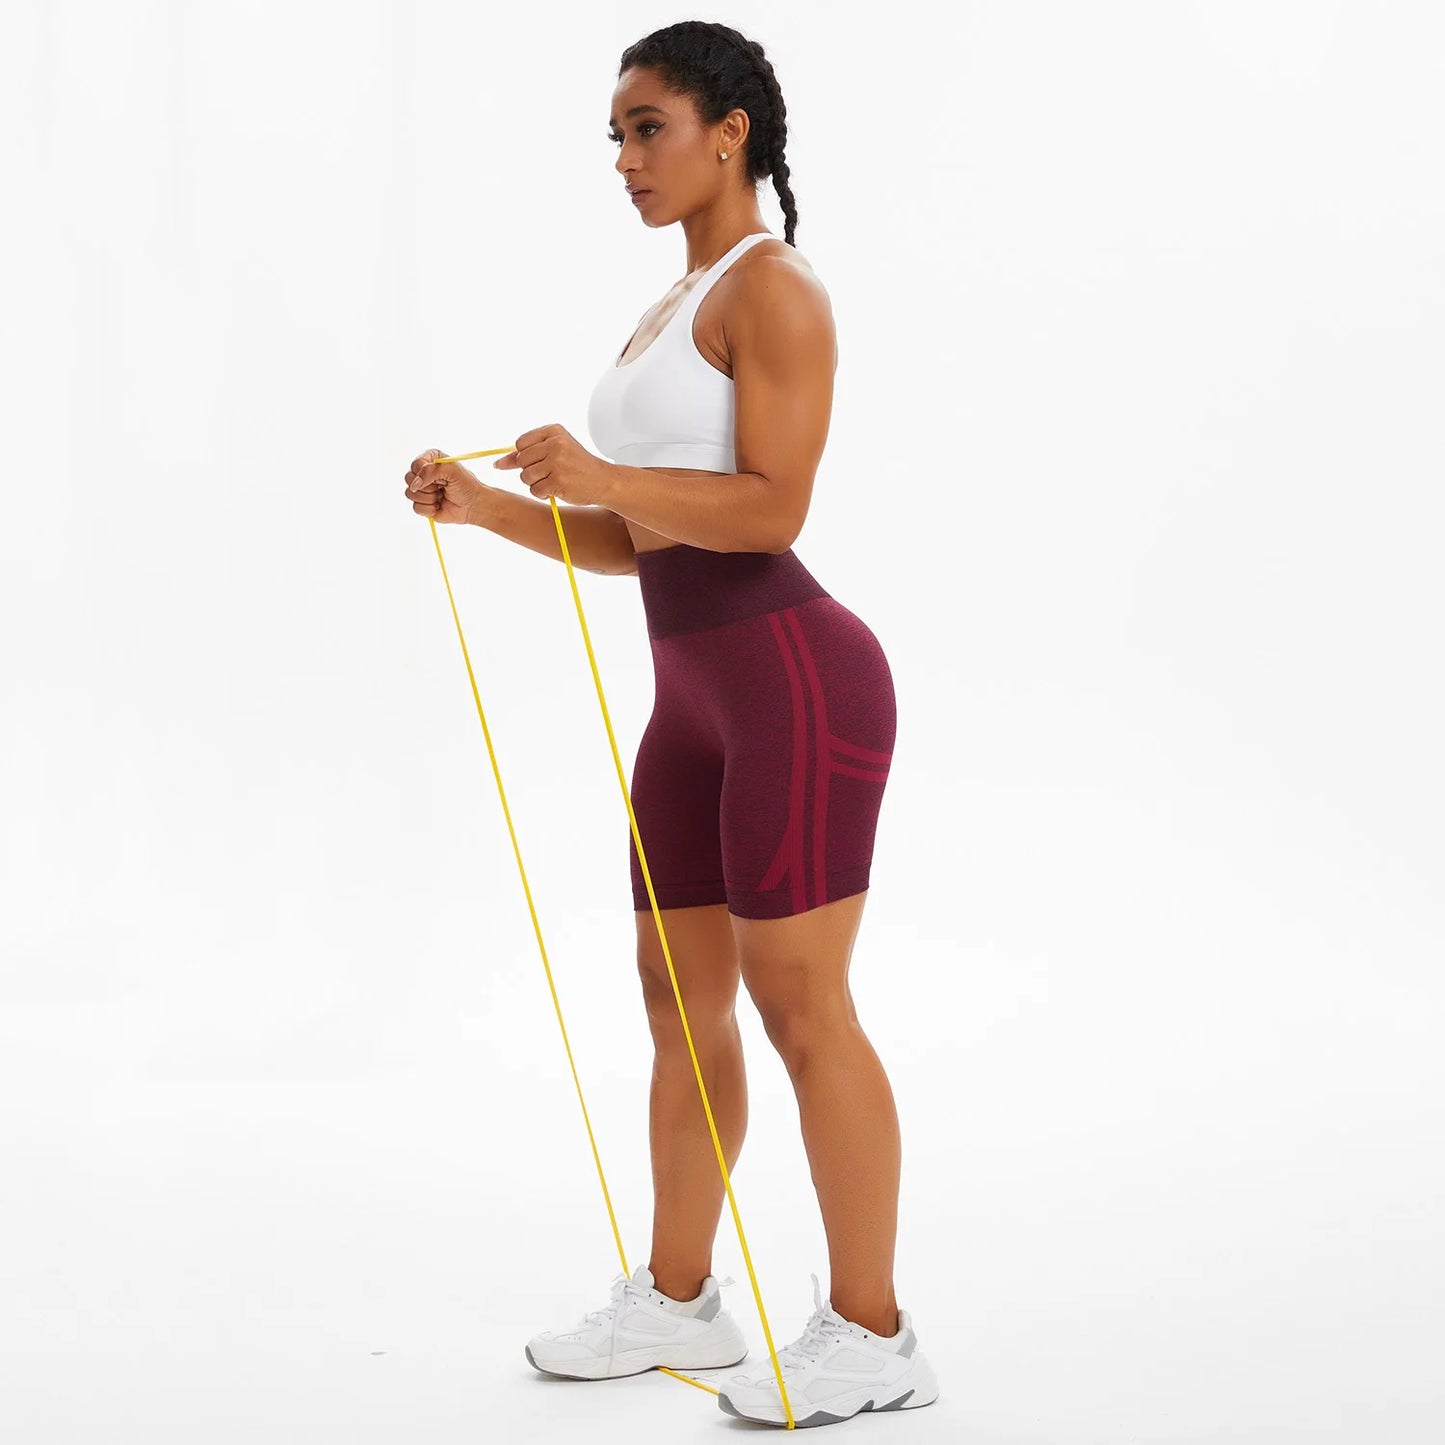 Seamless Sports Shorts For Women Hip Push Up/Short High Waist Leggings Gym Yoga Hot Shorts